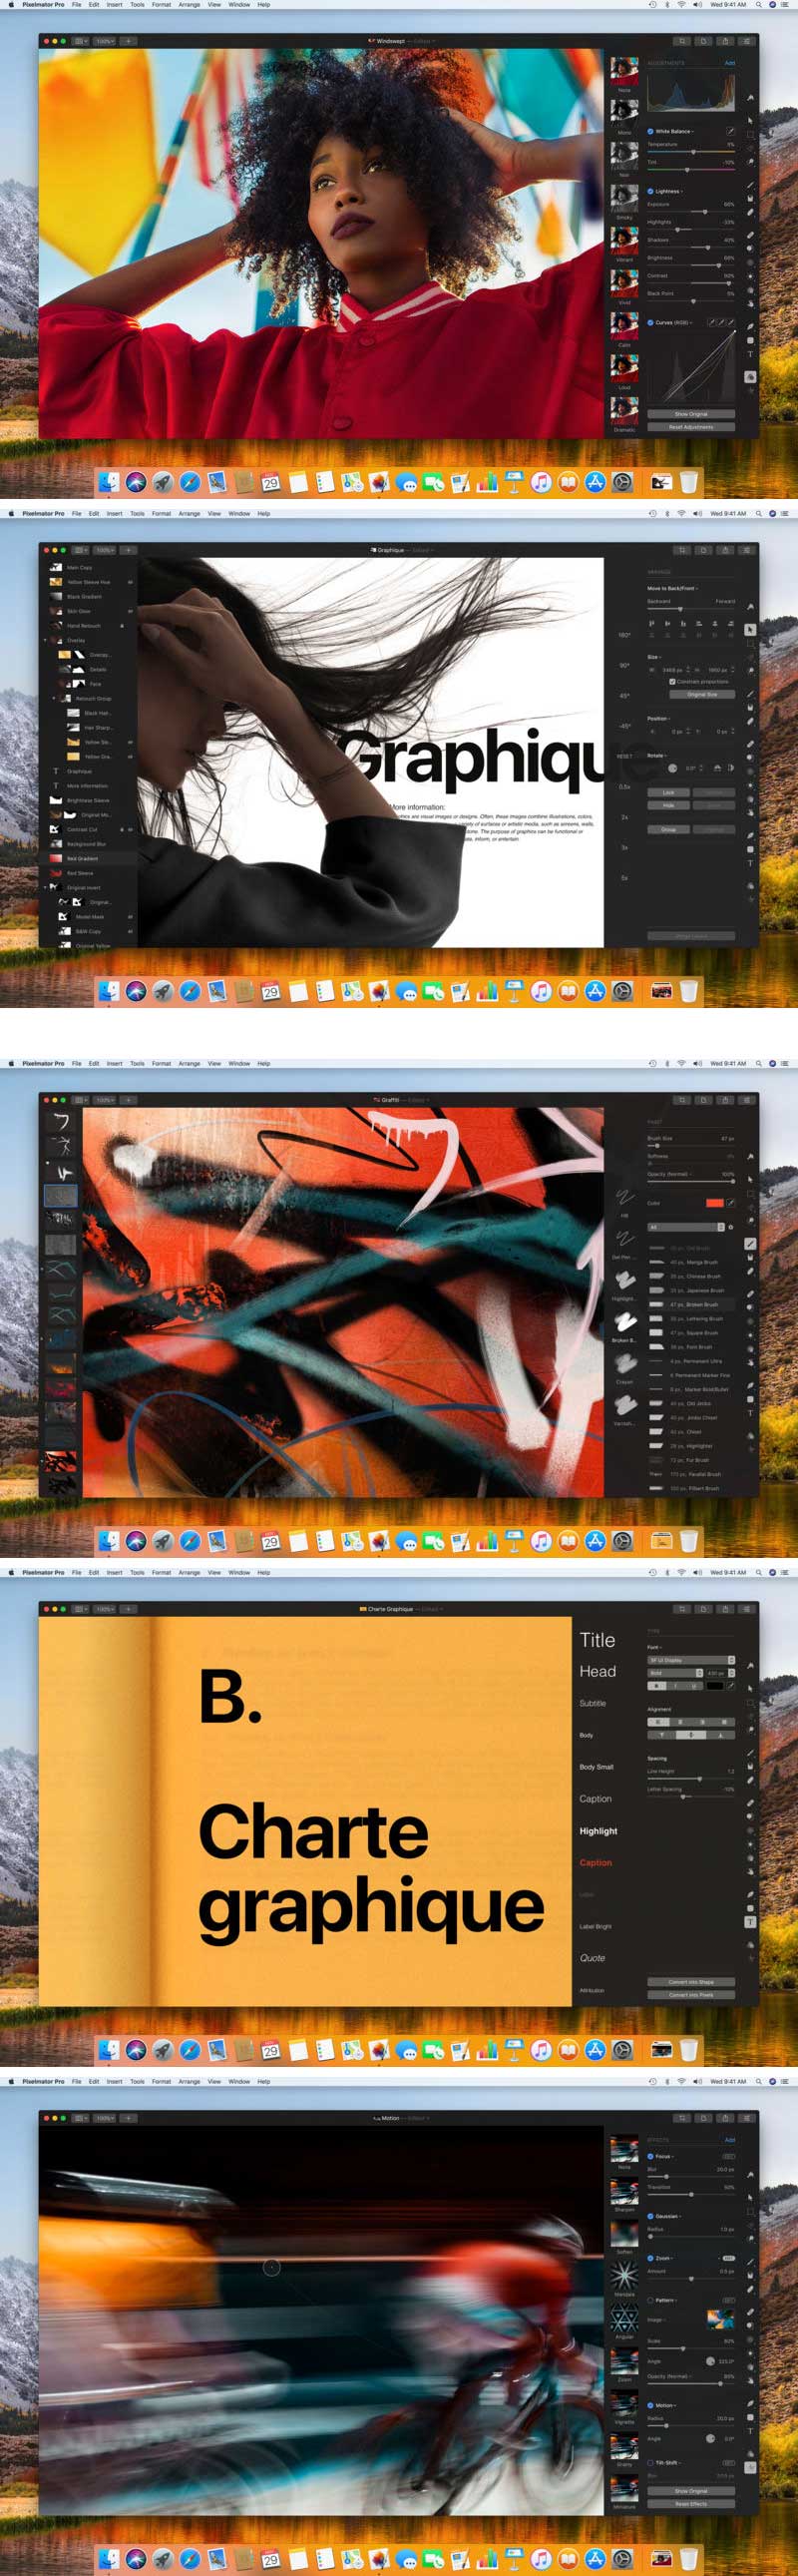 Pixelmator 3.9.1 for Mac 专业的图像编辑软件 破解激活版下载插图